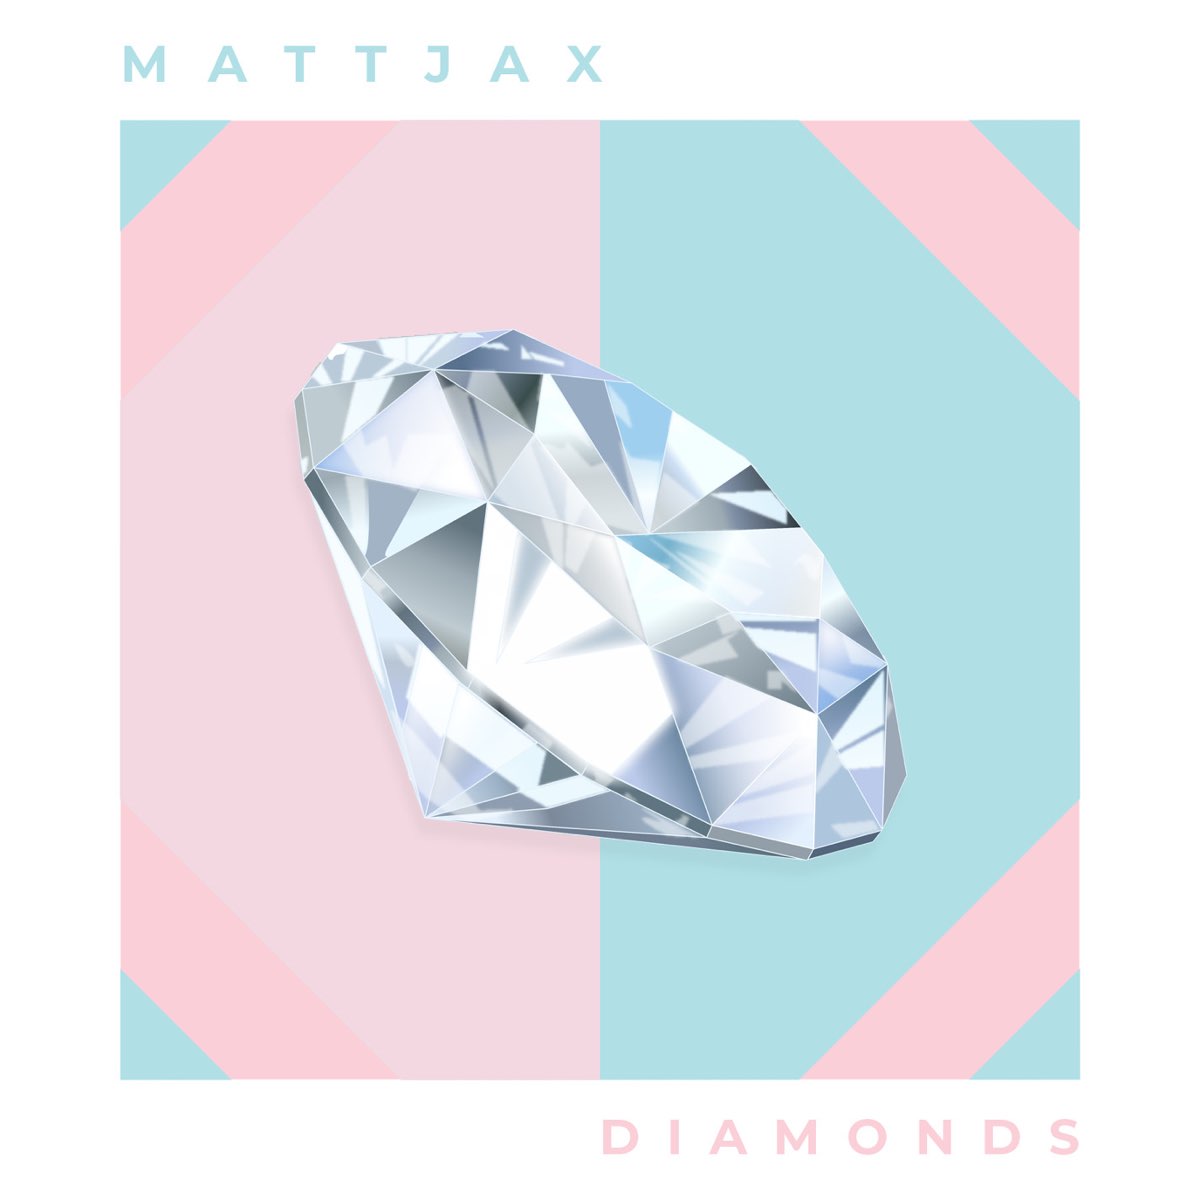 Diamonds - Single - Album by Mattjax - Apple Music